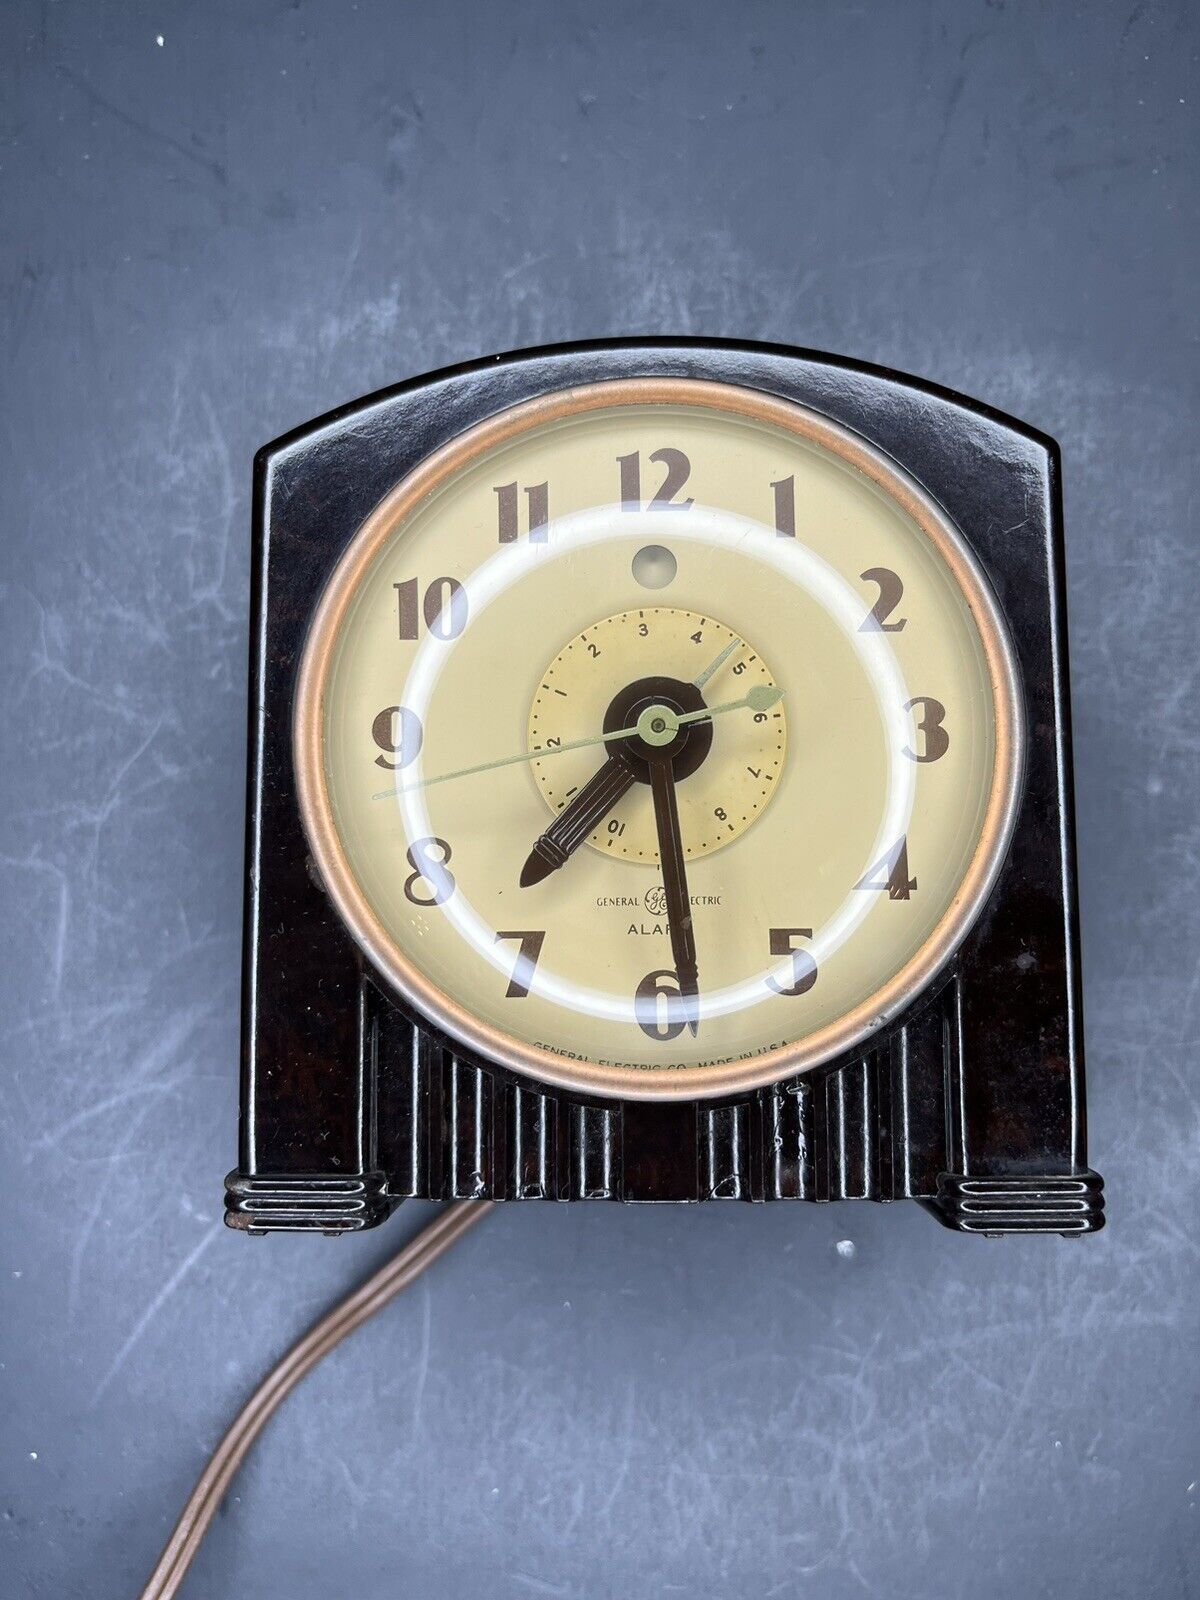 Vintage GE General Electric Alarm Clock Model 7H154 1930s Tested Working USA